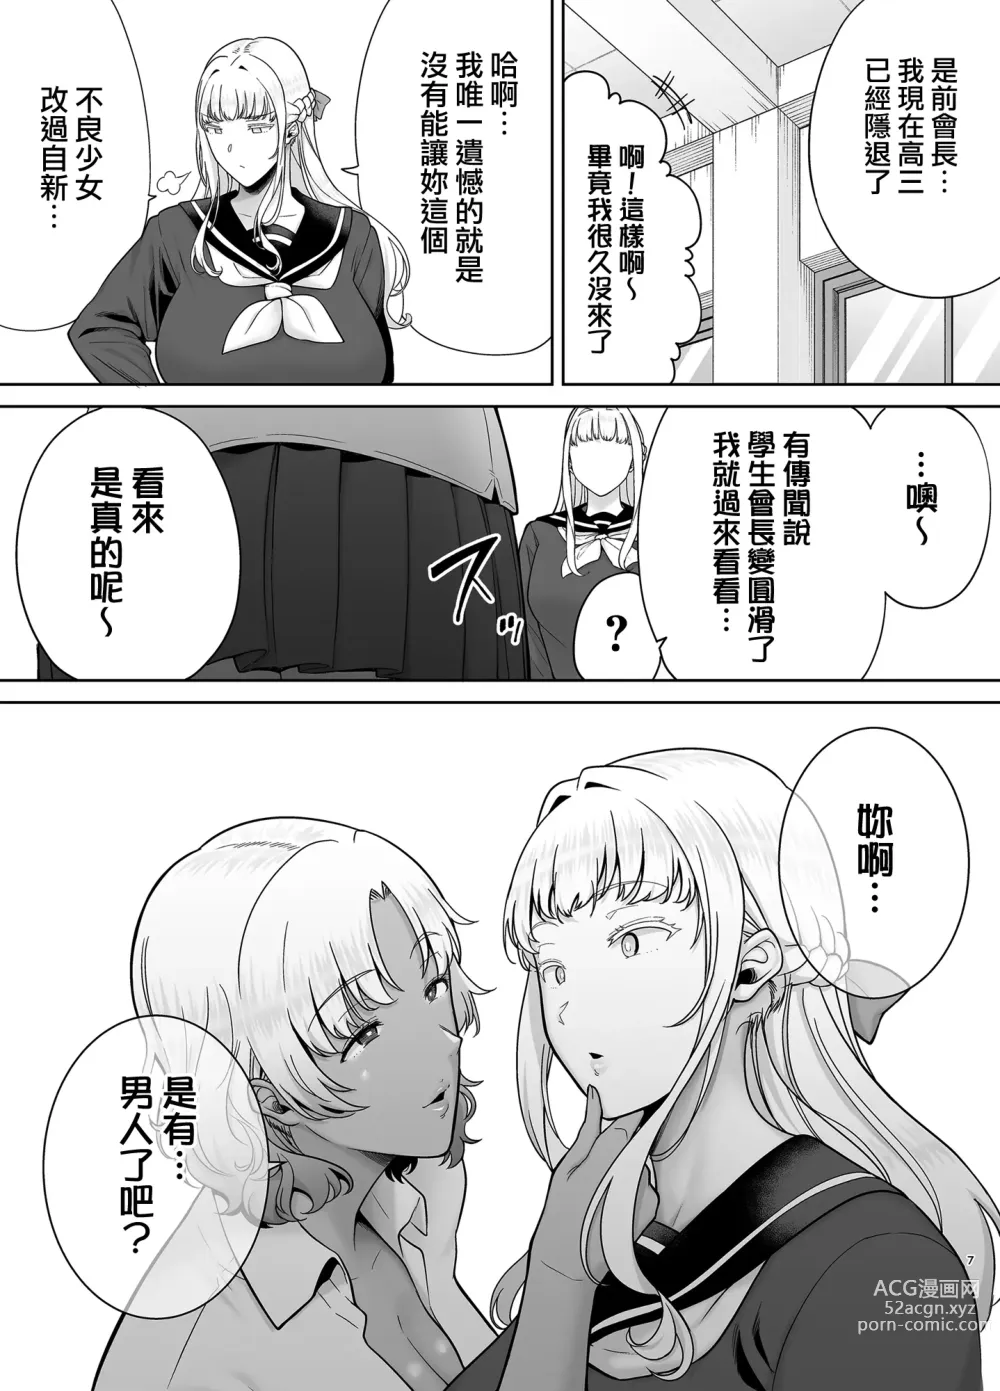 Page 7 of manga 聖華女学院公認竿おじさん7